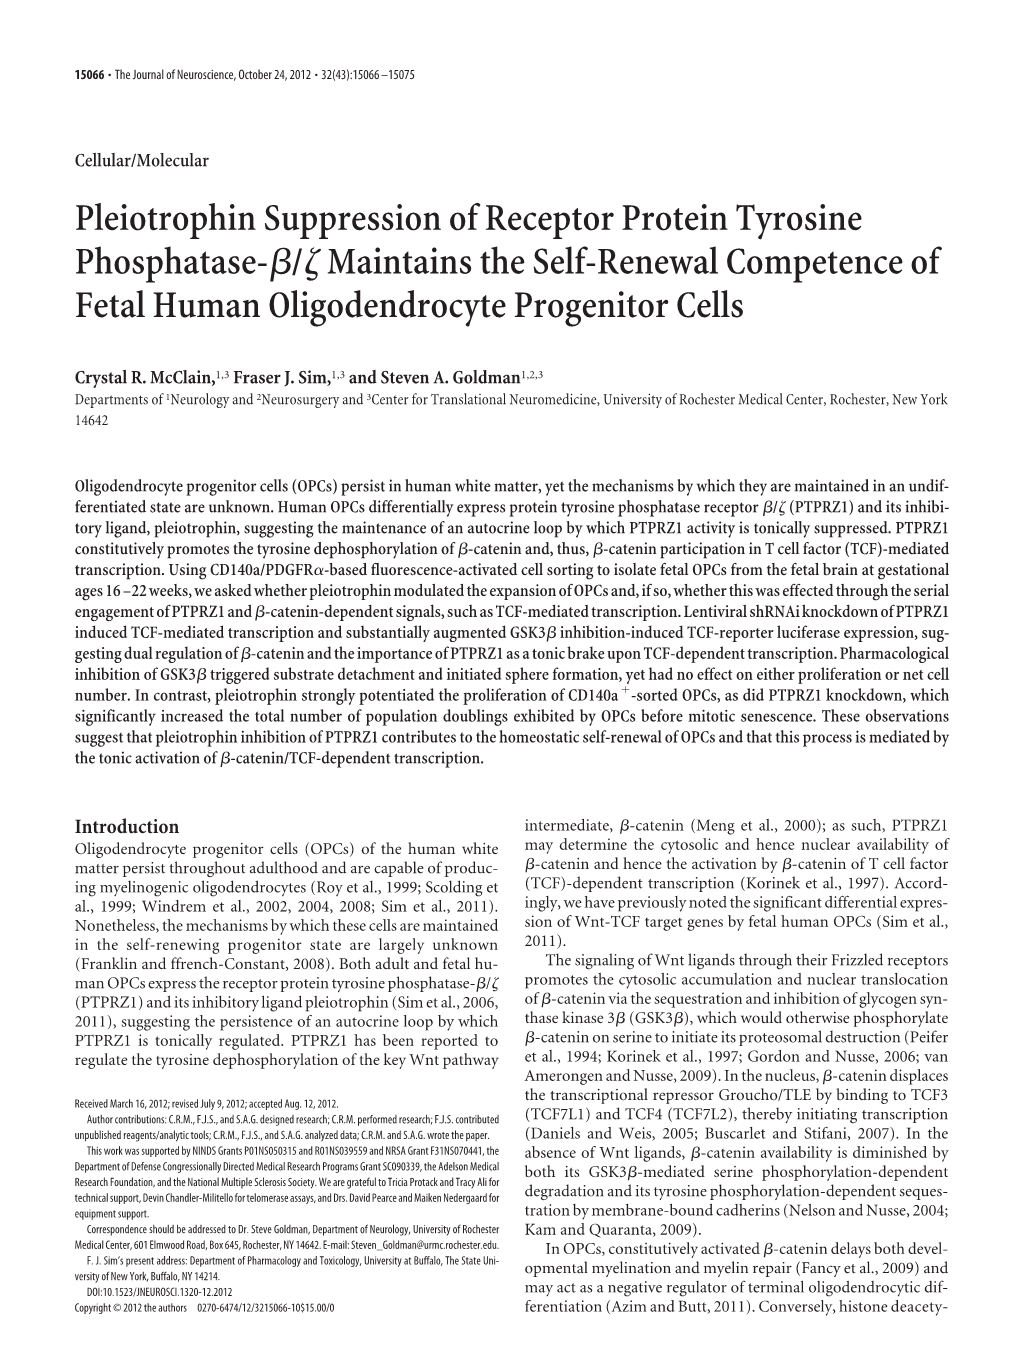 Pleiotrophin Suppression of Receptor Protein Tyrosine Phosphatase-ß